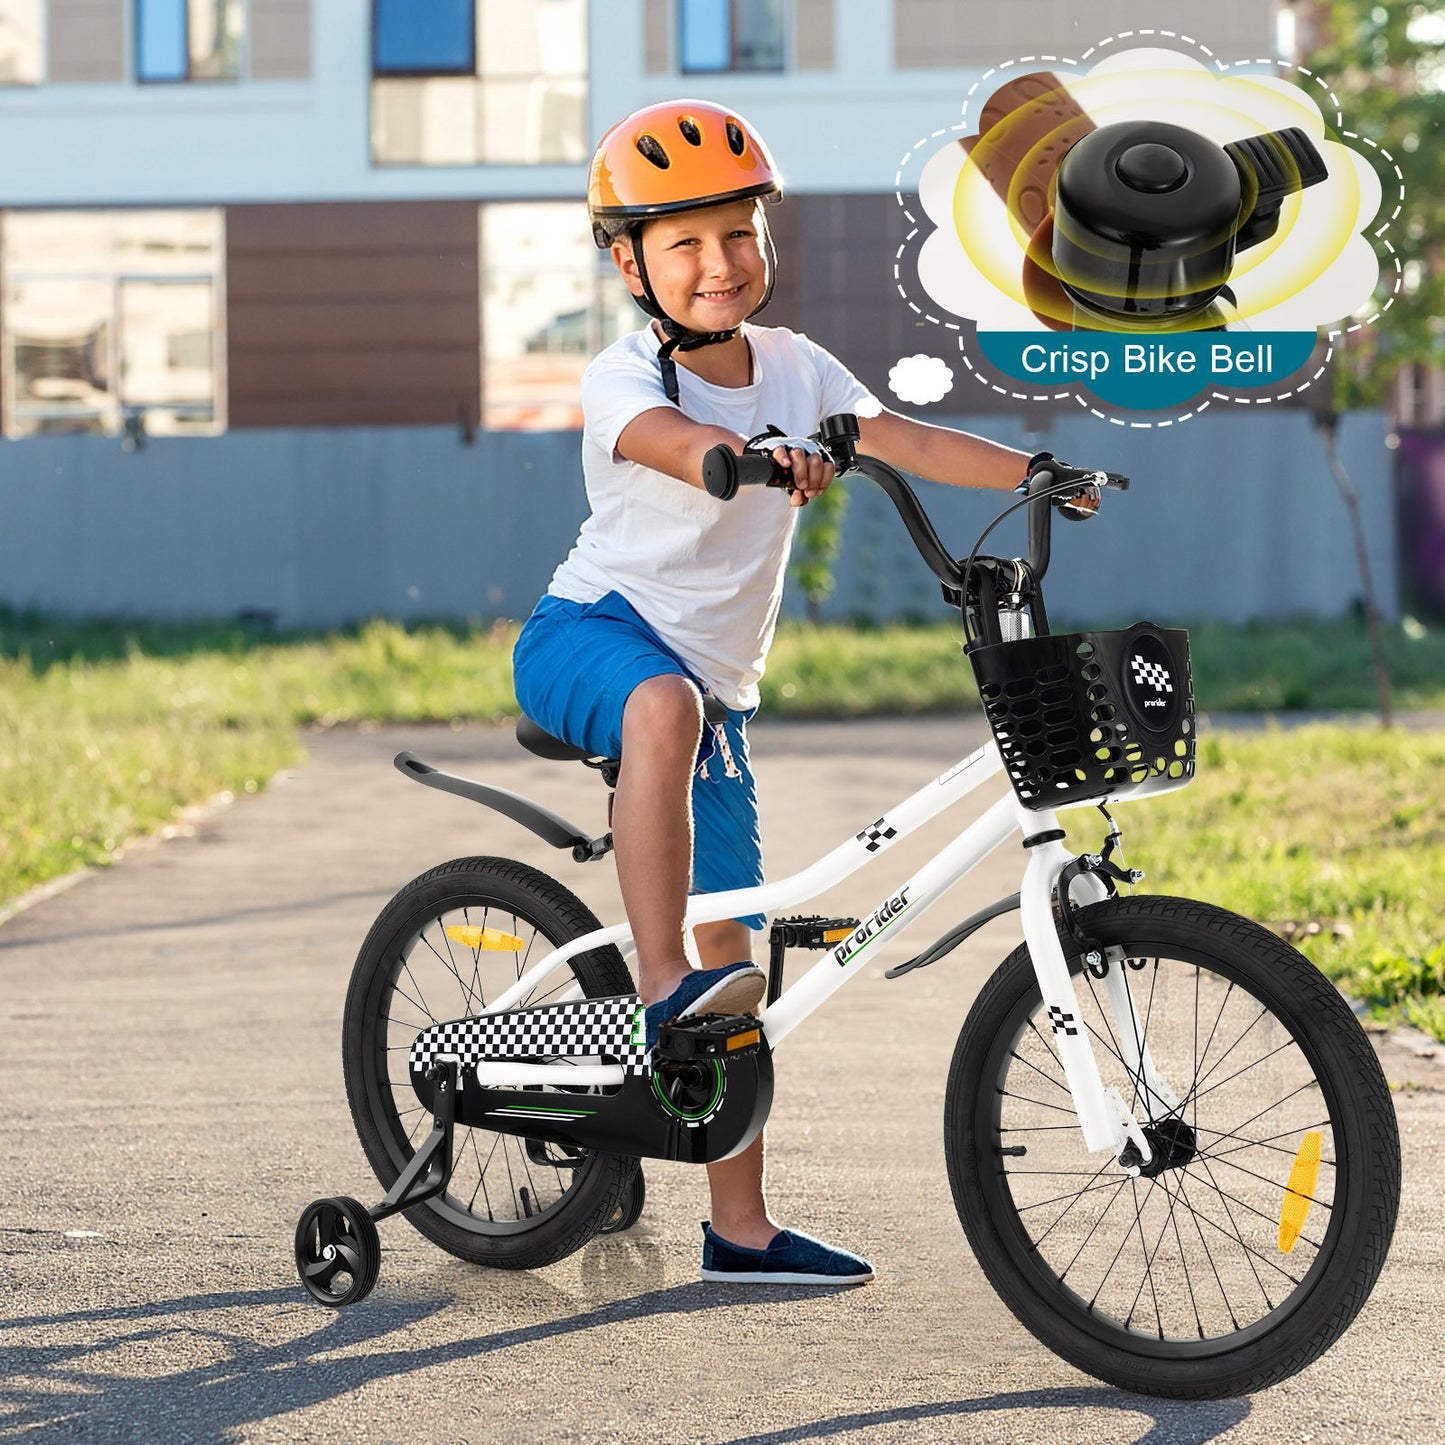 18 Feet Kids Bike with Removable Training Wheels, Black & White